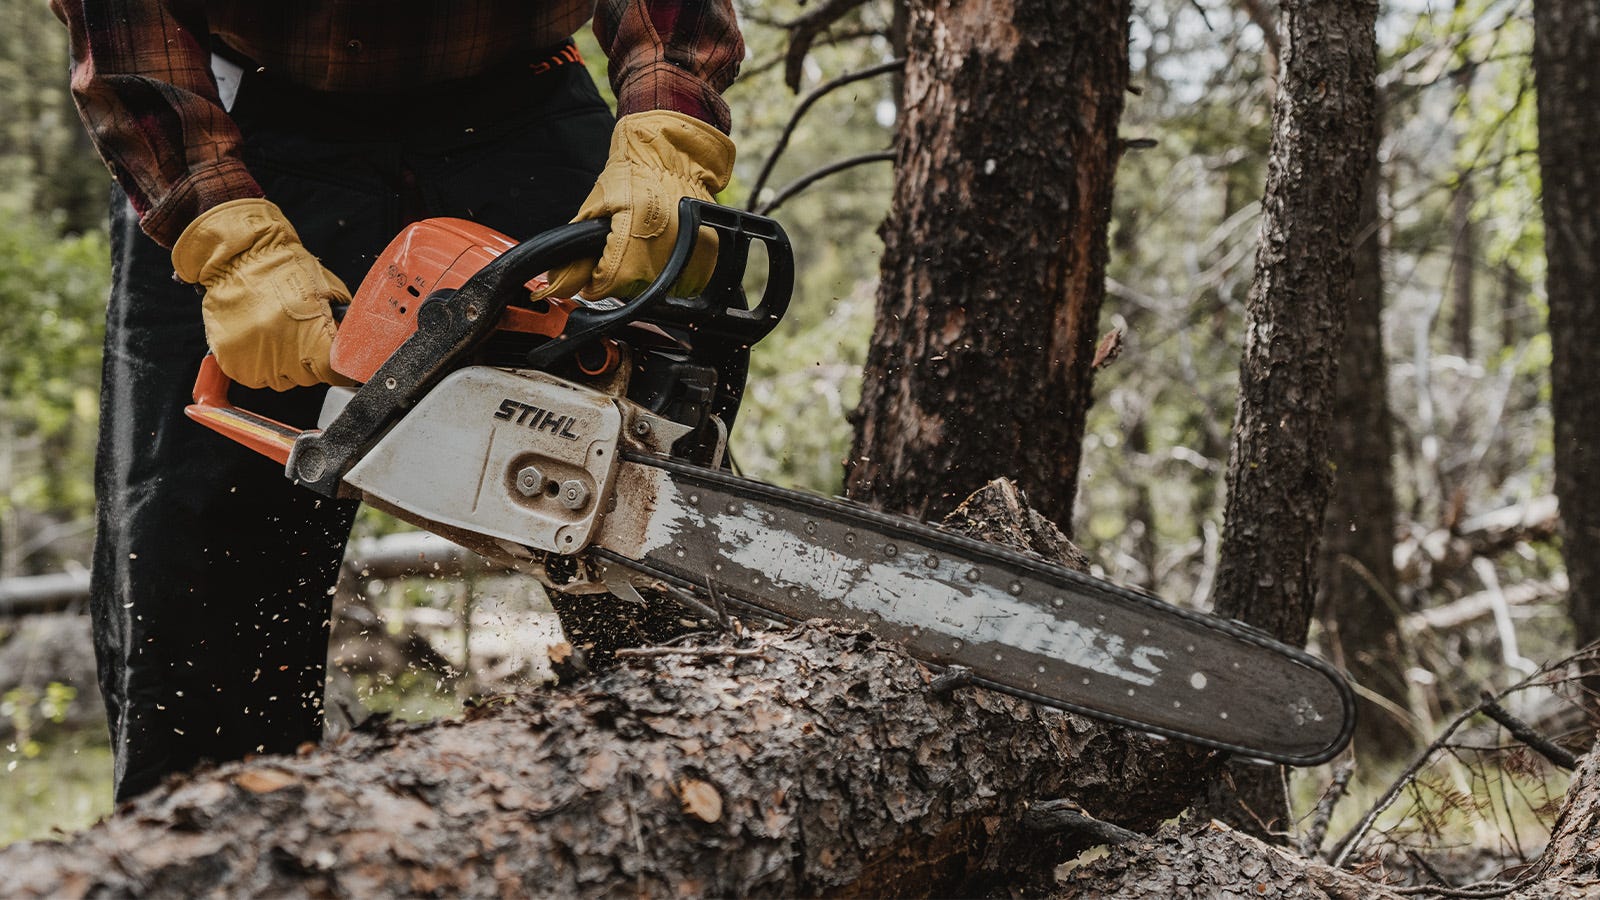 A Stihl chainsaw cuts through a fallen log in a forest